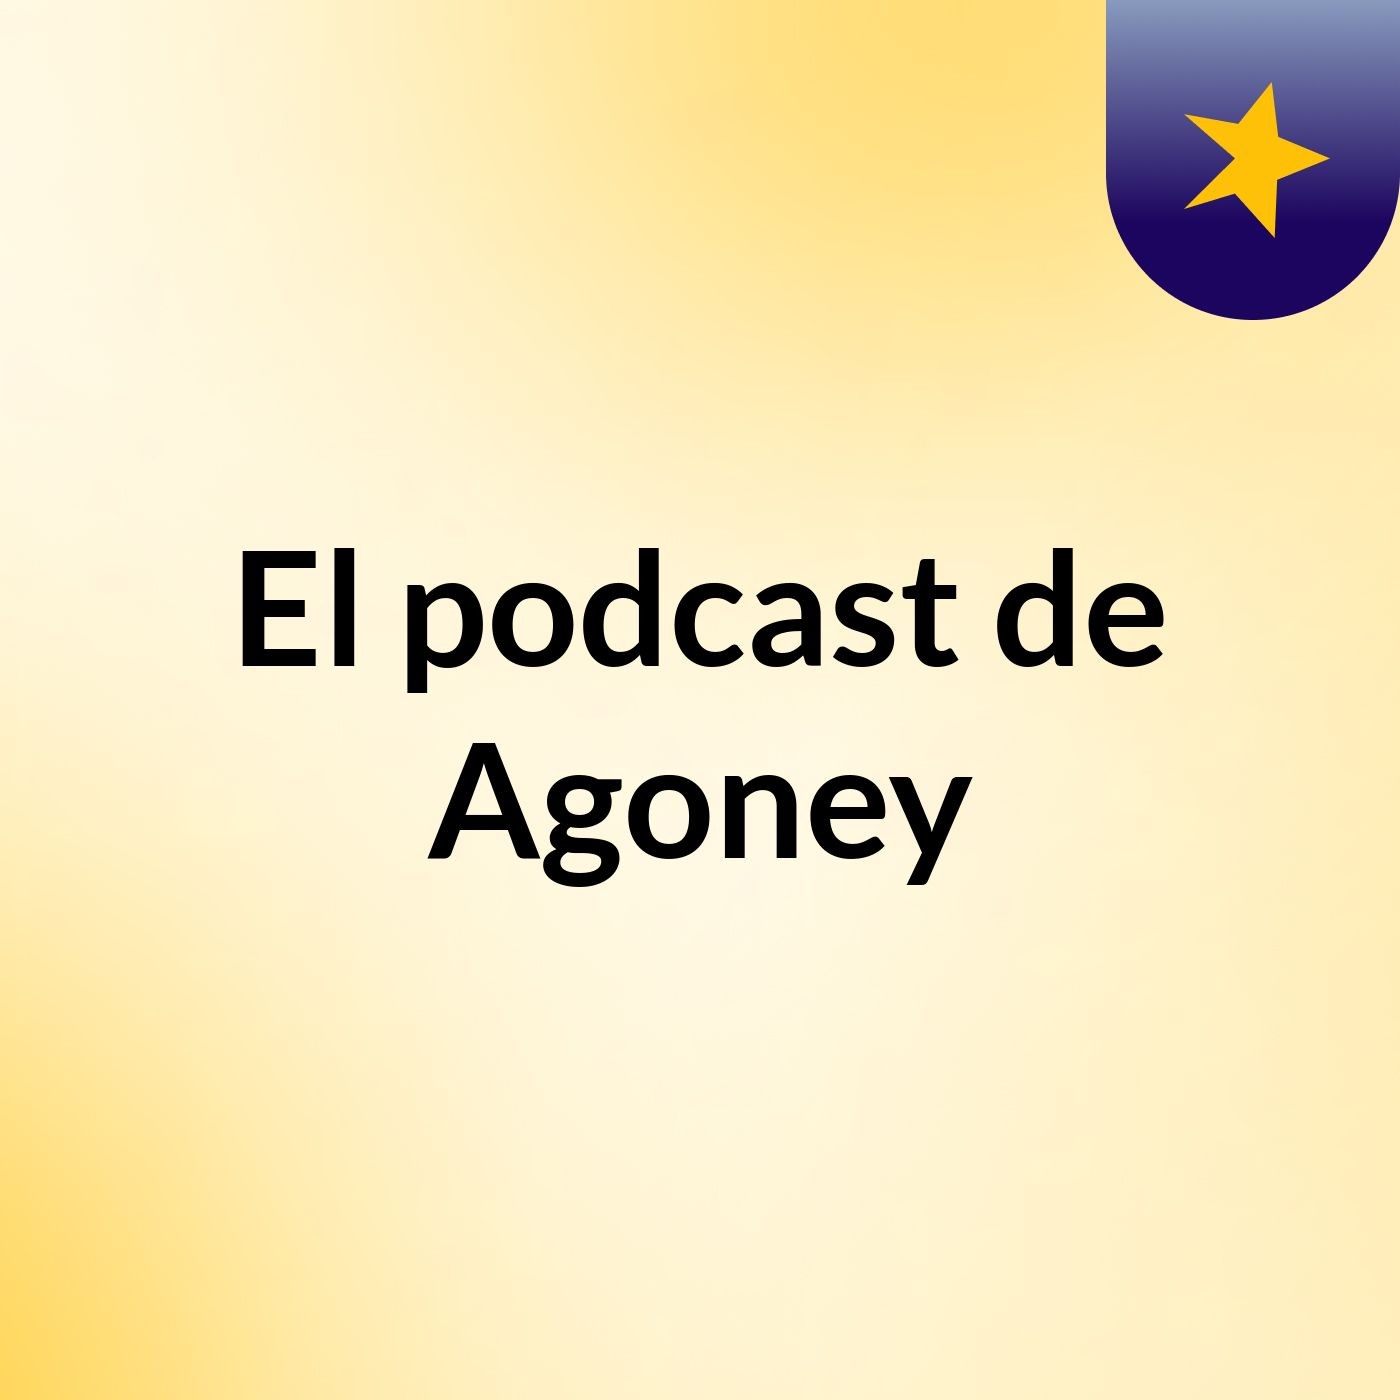 Episodio 4 - El podcast de Agoney